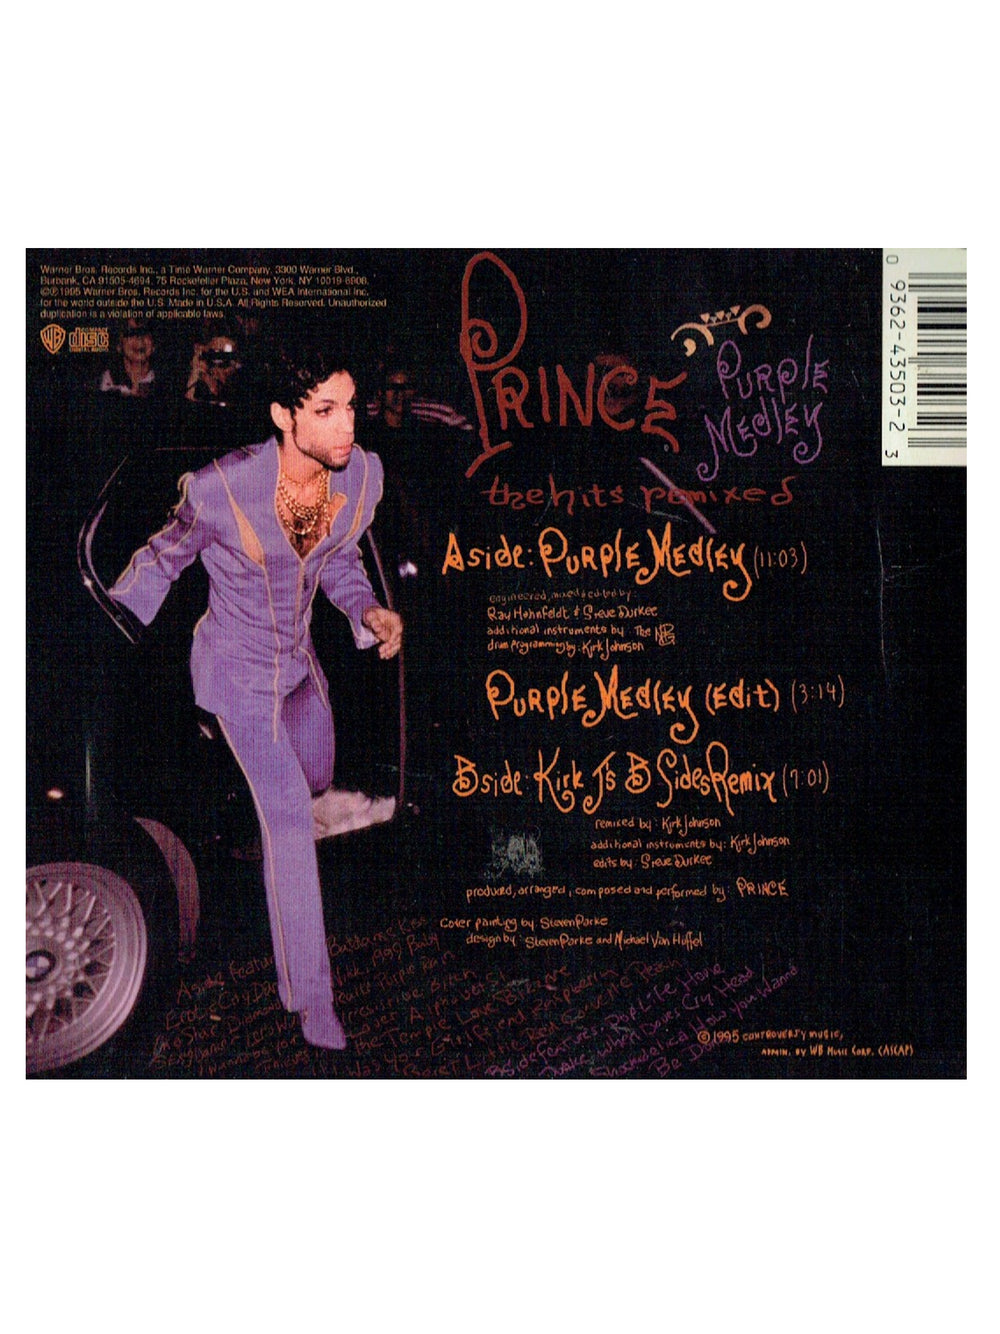 Prince Purple Medley CD Single Flip Case 1995 Original USA Release Rare